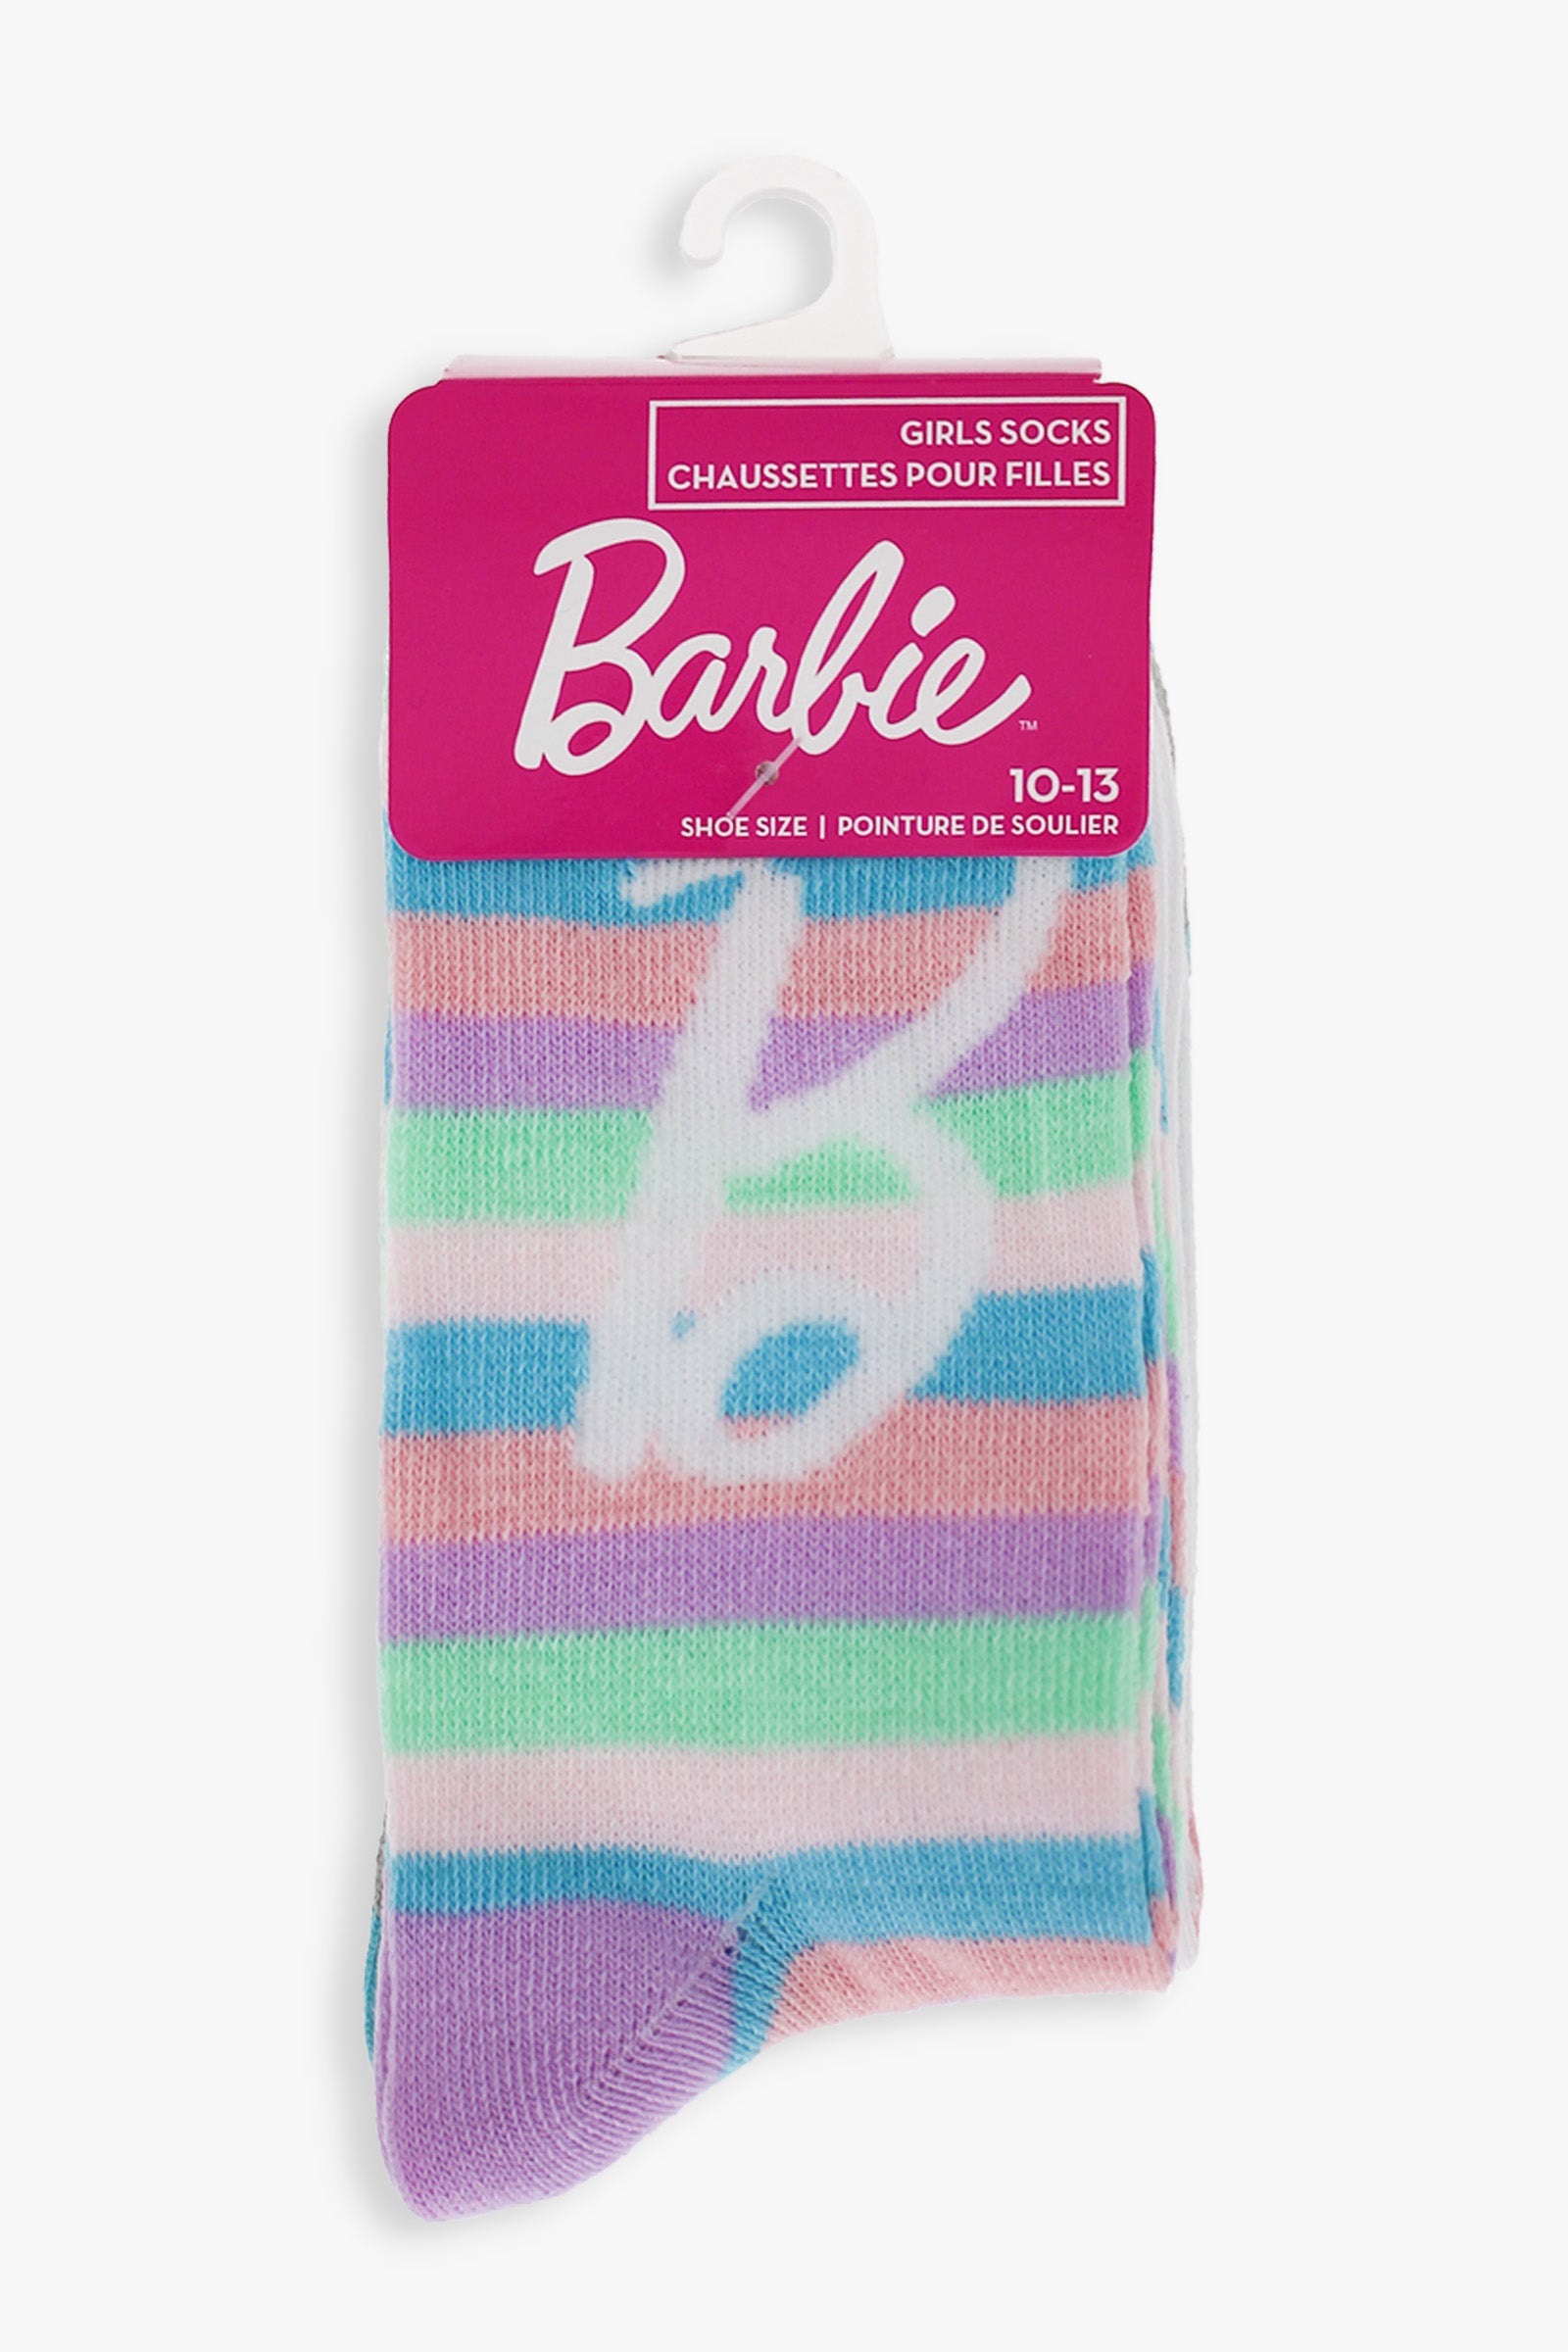 Gertex Barbie Youth Girls 3-Pack Graphic Crew Socks